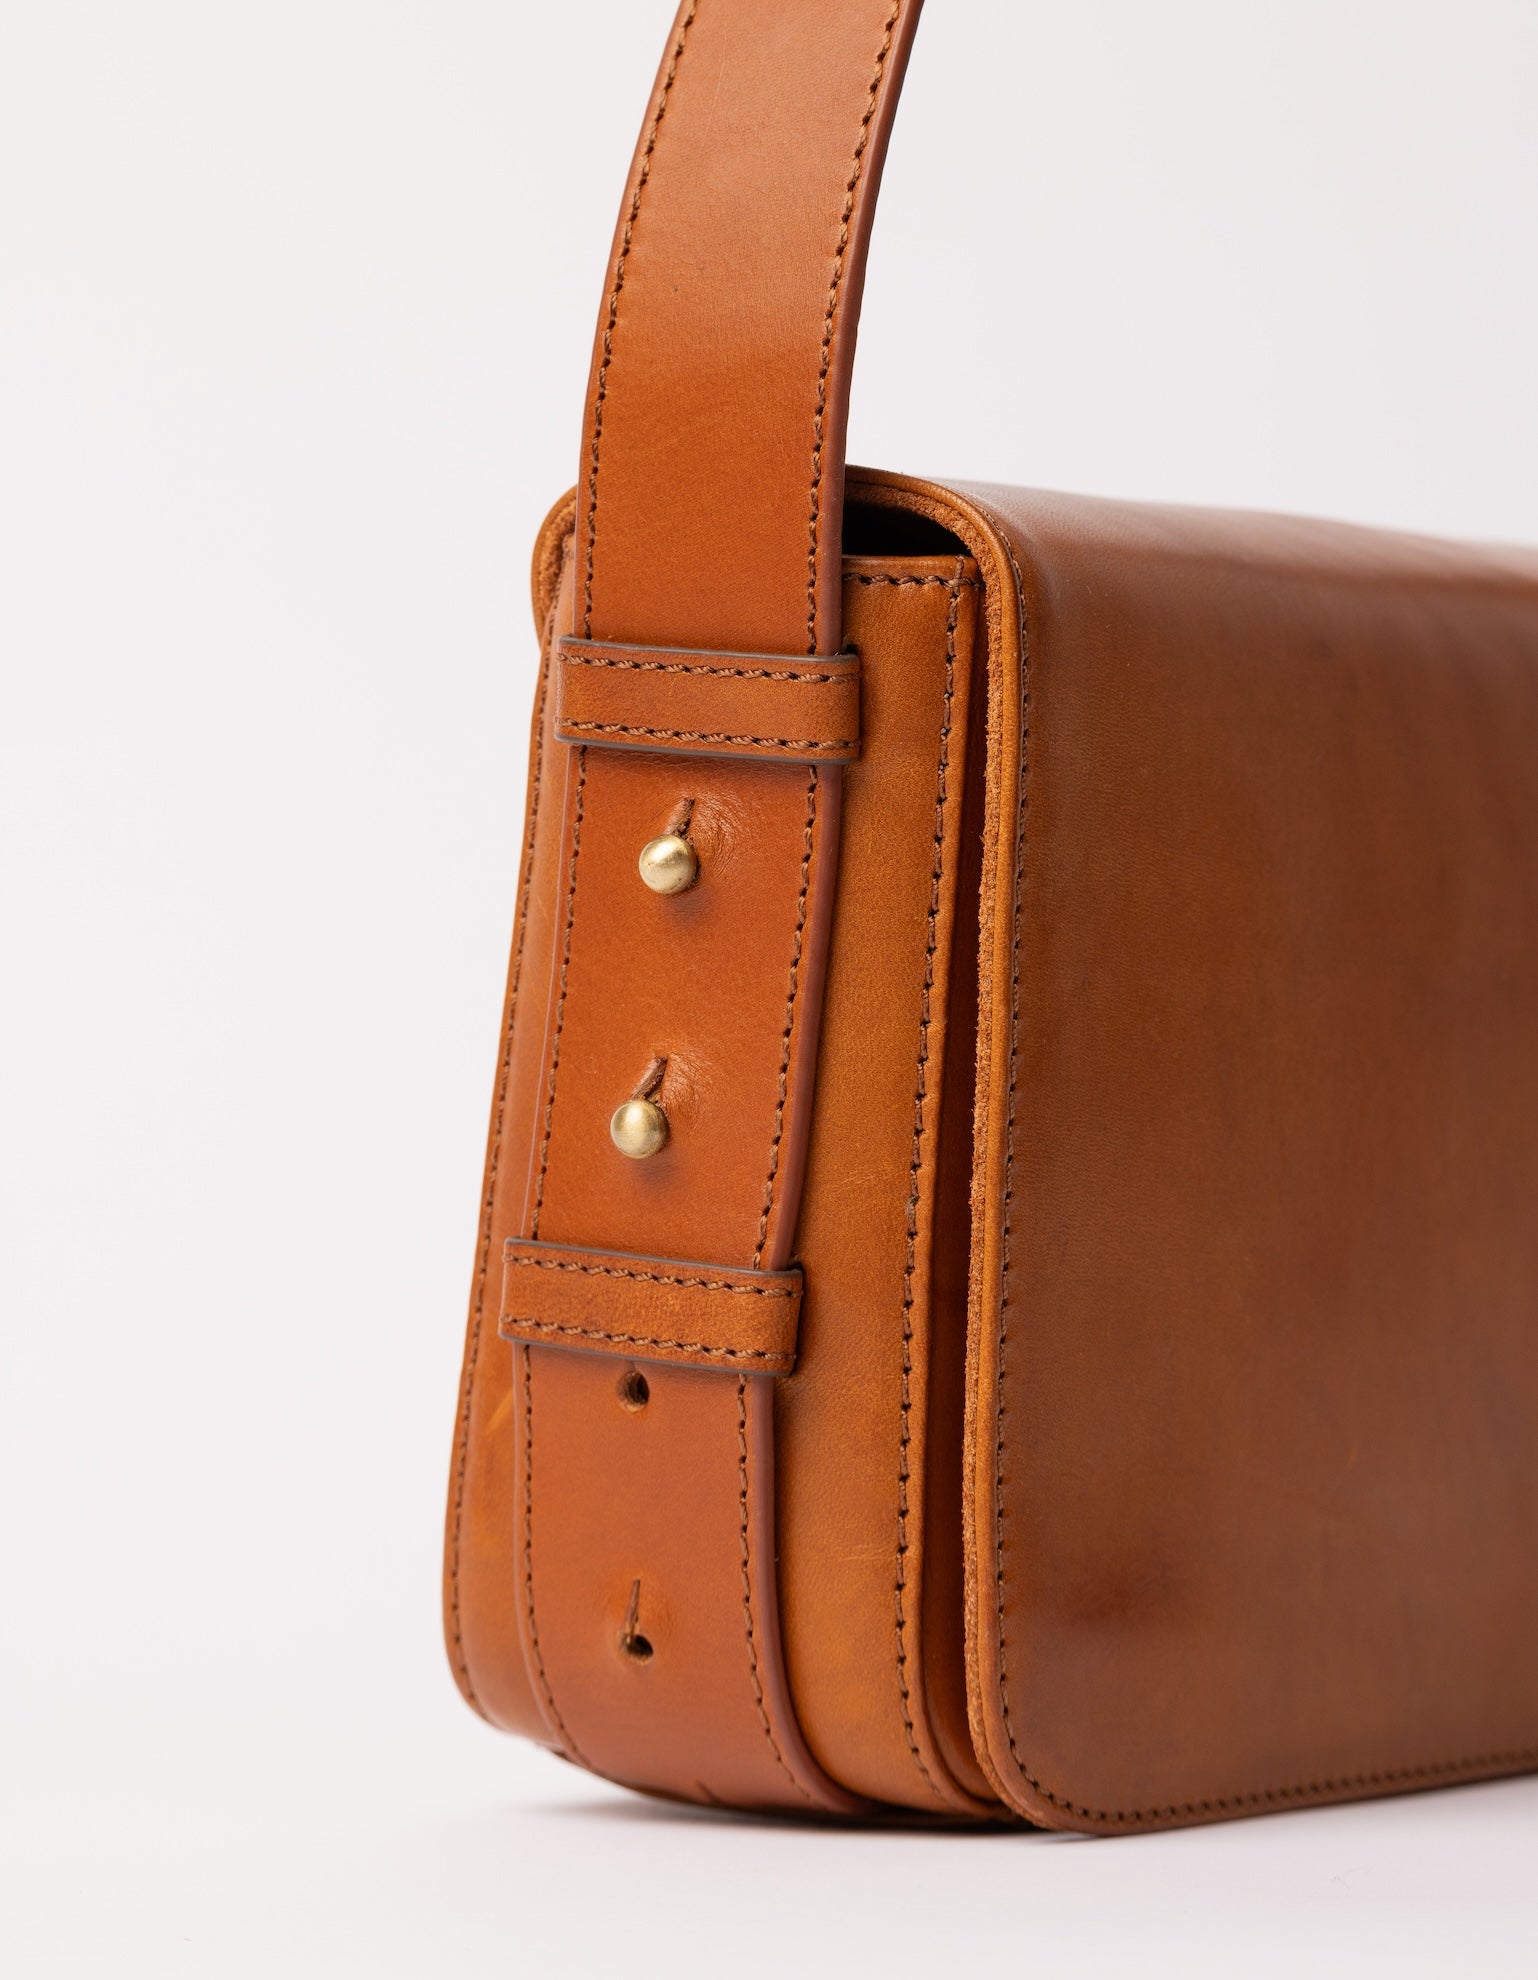 Cognac Longuette Leather womens handbag. Square shape with an adjustable strap. Close-up of adjustable strap details.